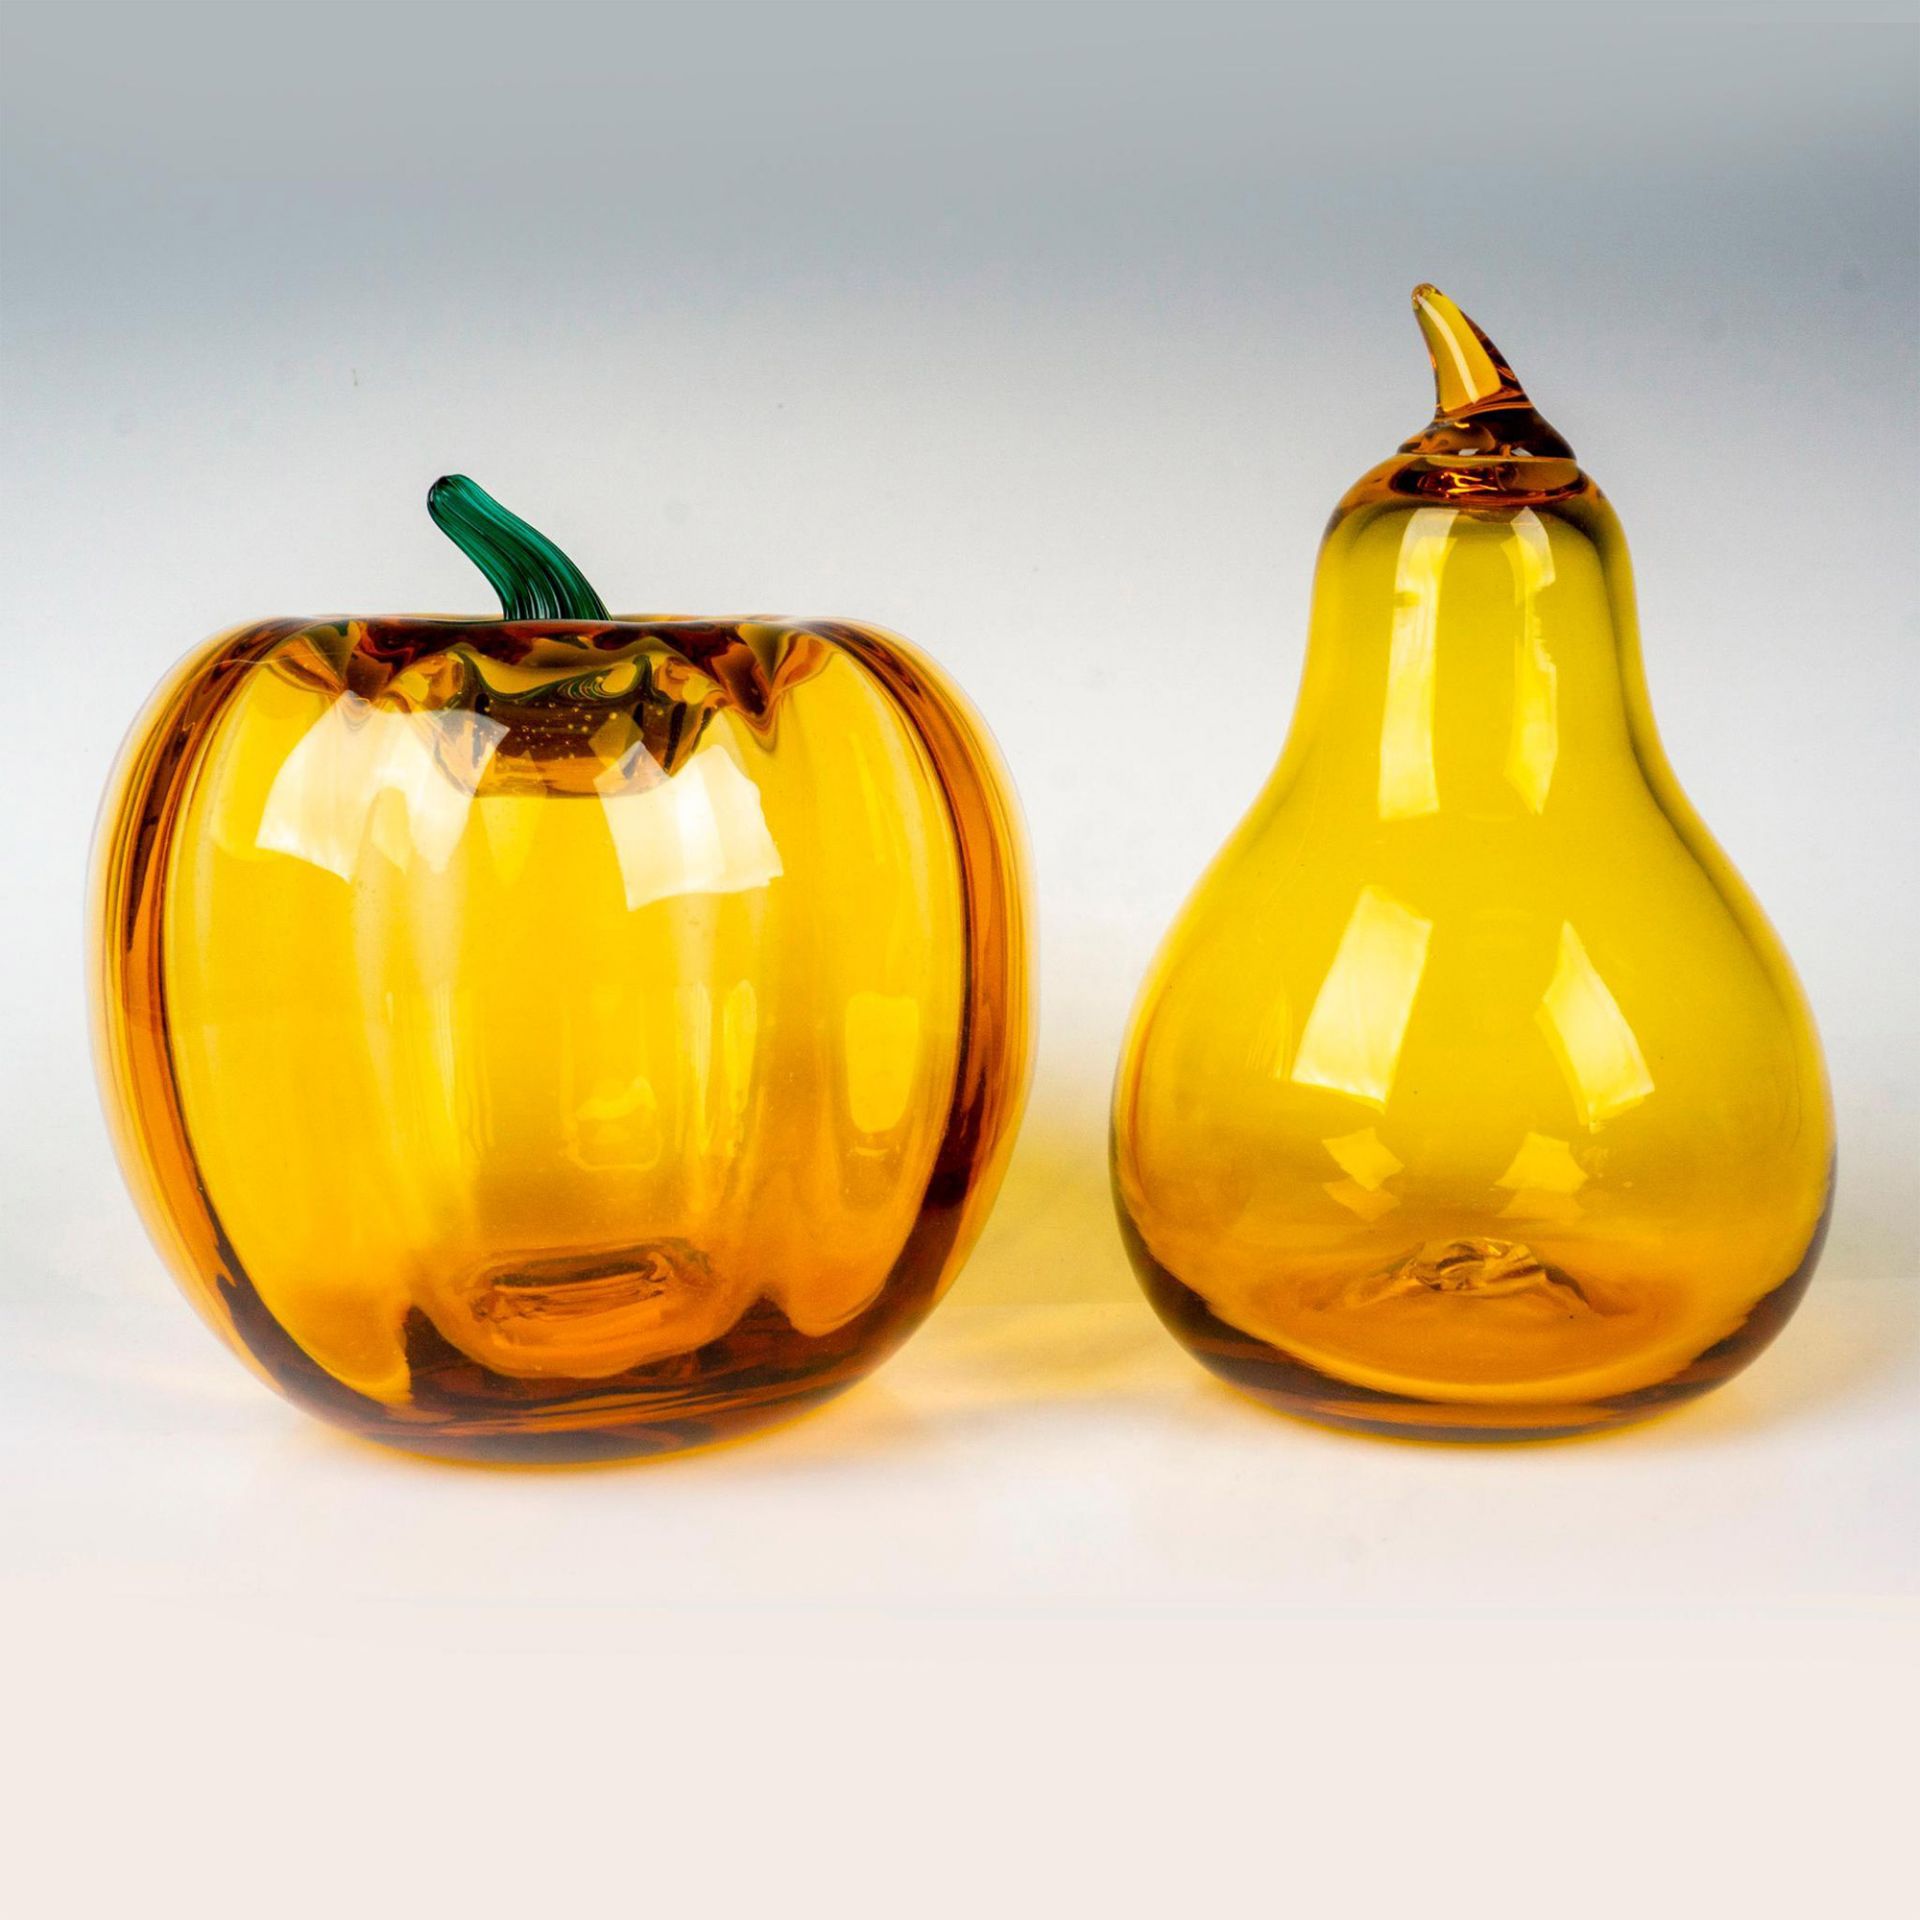 2pc Vintage Art Studio Glass Pear and Pumpkin Figurines - Image 2 of 3